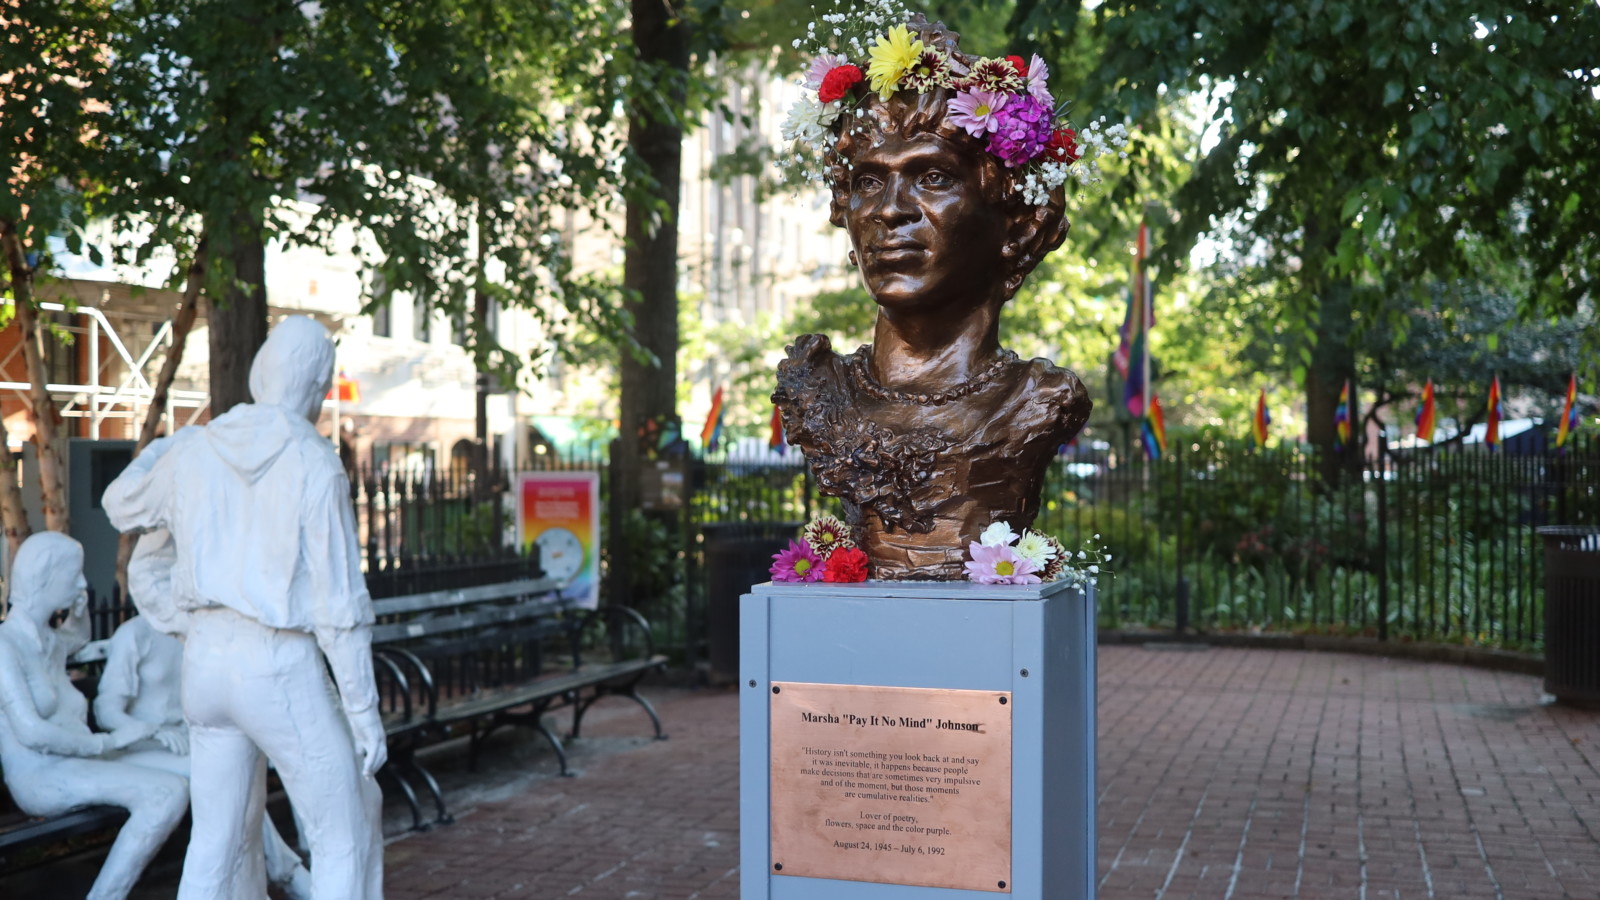 To show statue of Marsha P. Johnson